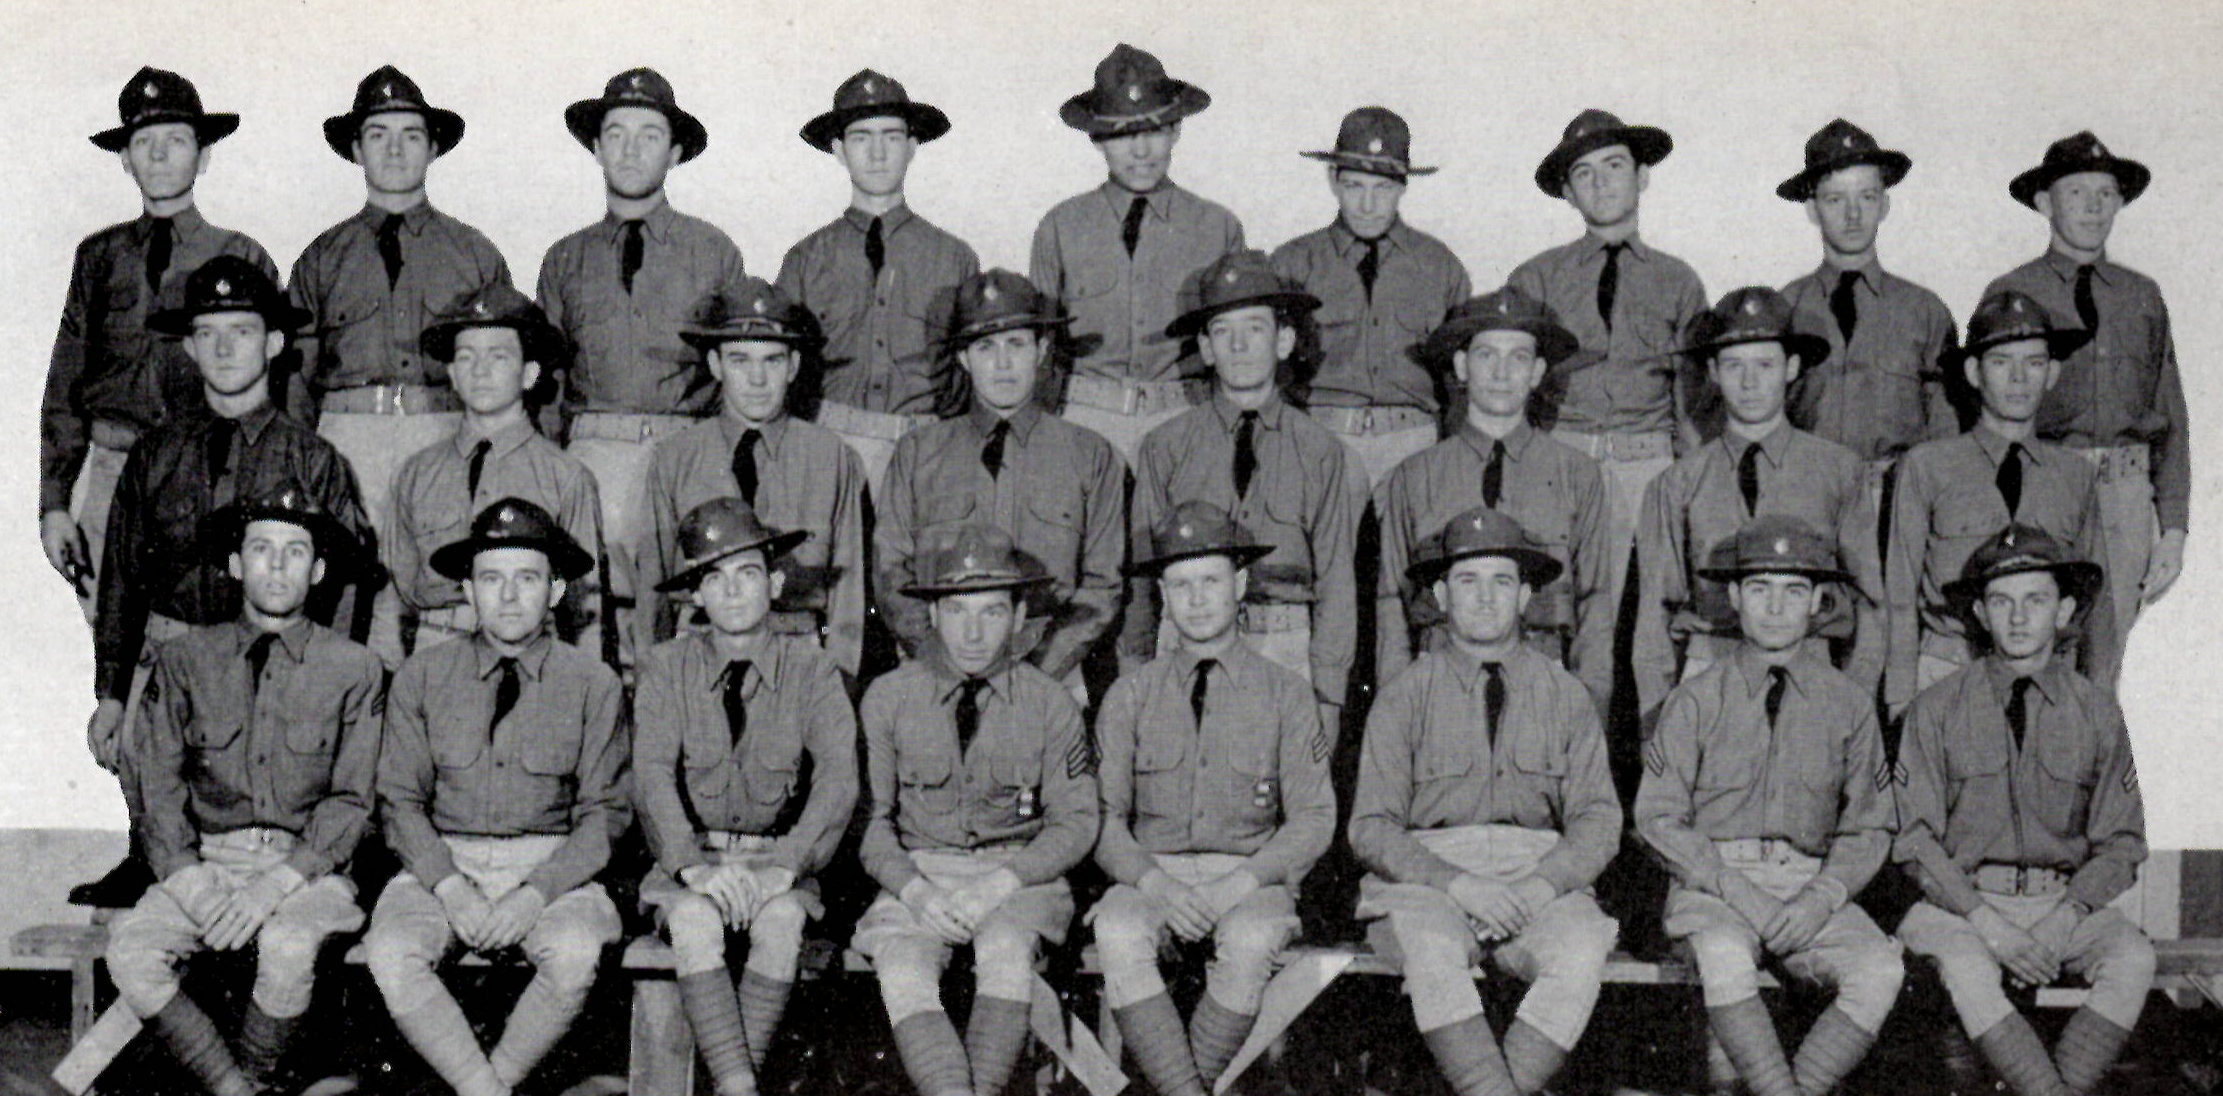 Company H 141st Infantry Regiment 36th Infantry Division - 1940